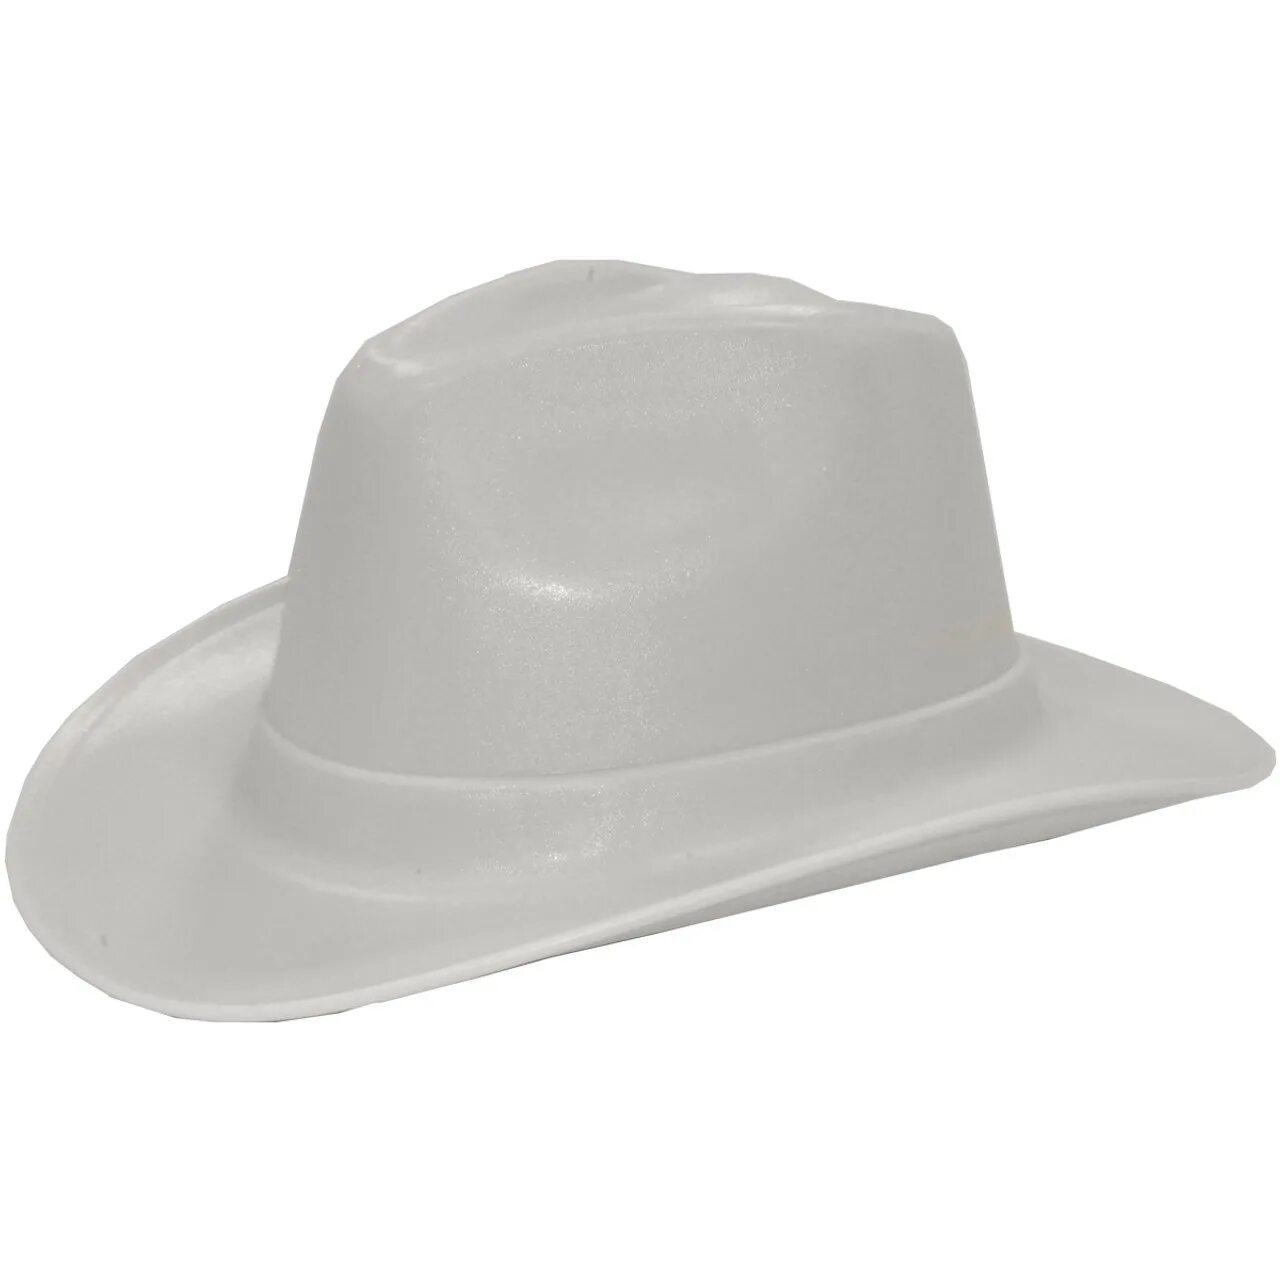 Купить каску шляпу строительную. Vulka vcb100-00 hard hat строительная. Vulcan Cowboy Style hard hat White. Каска строительная шляпа. Строительная каска в виде ковбойской шляпы.